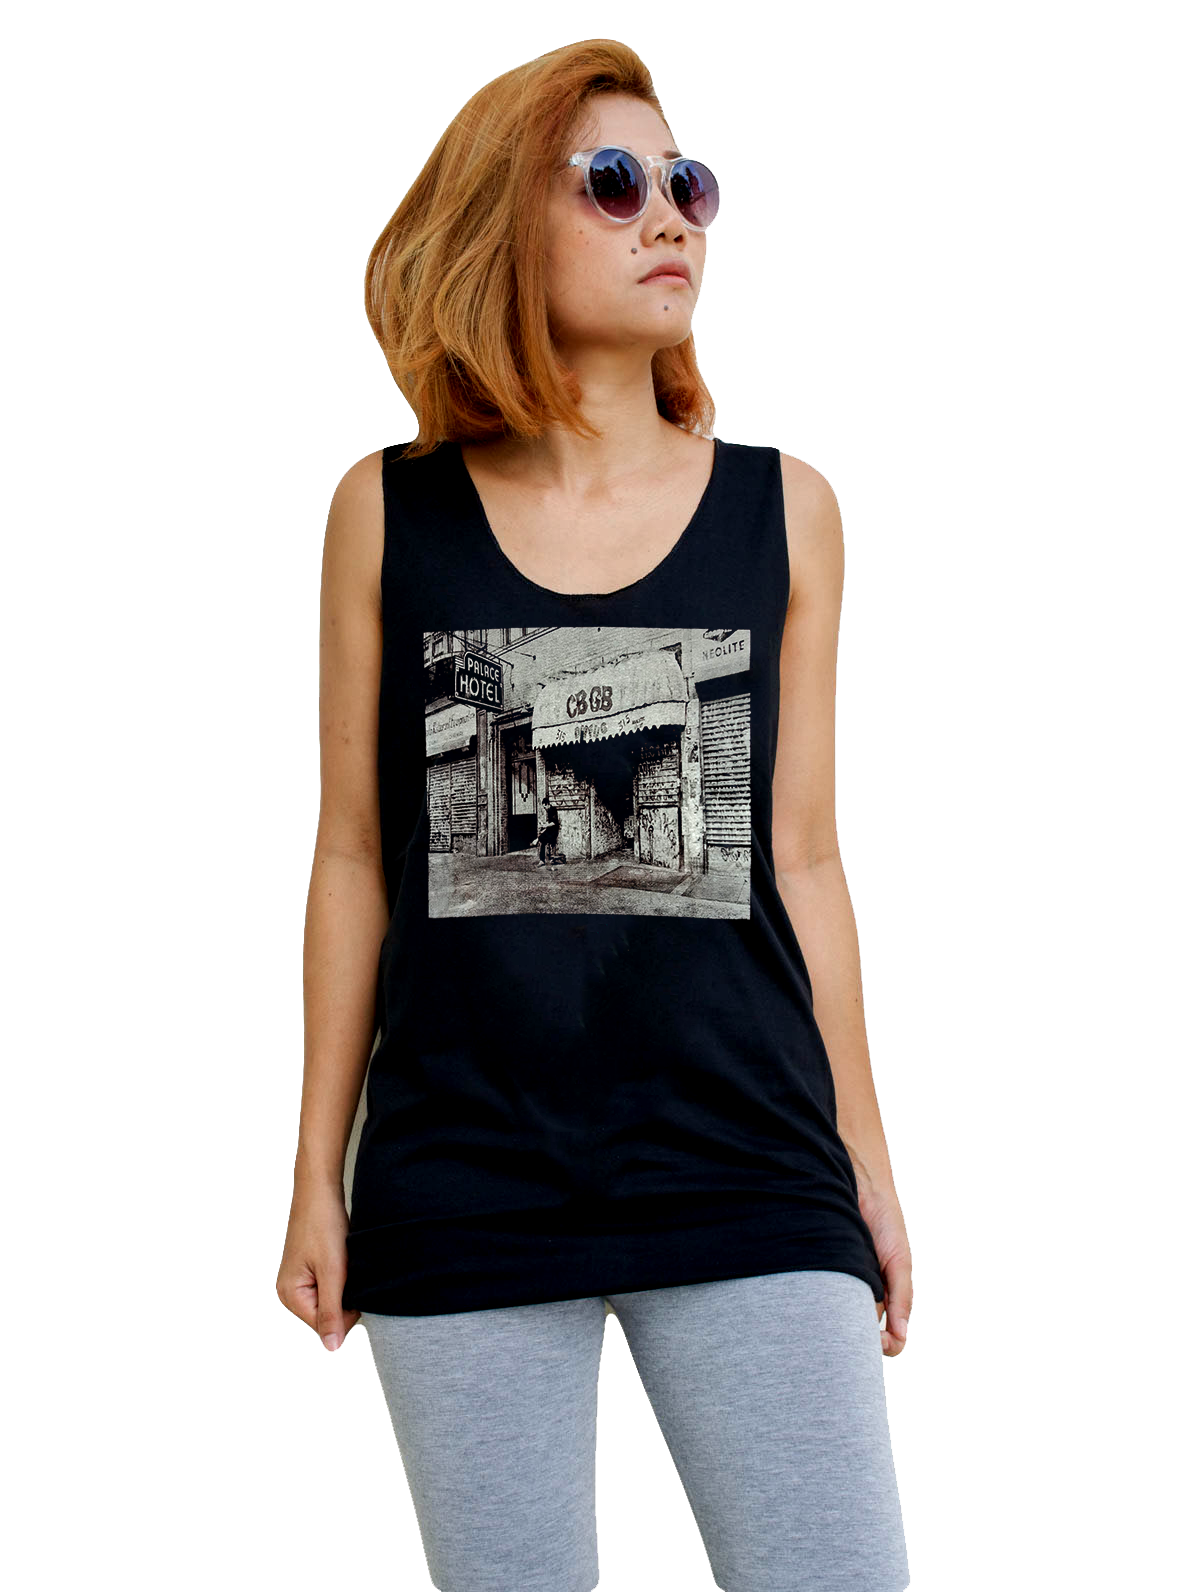 Unisex CBGB Tank-Top Singlet vest Sleeveless T-shirt